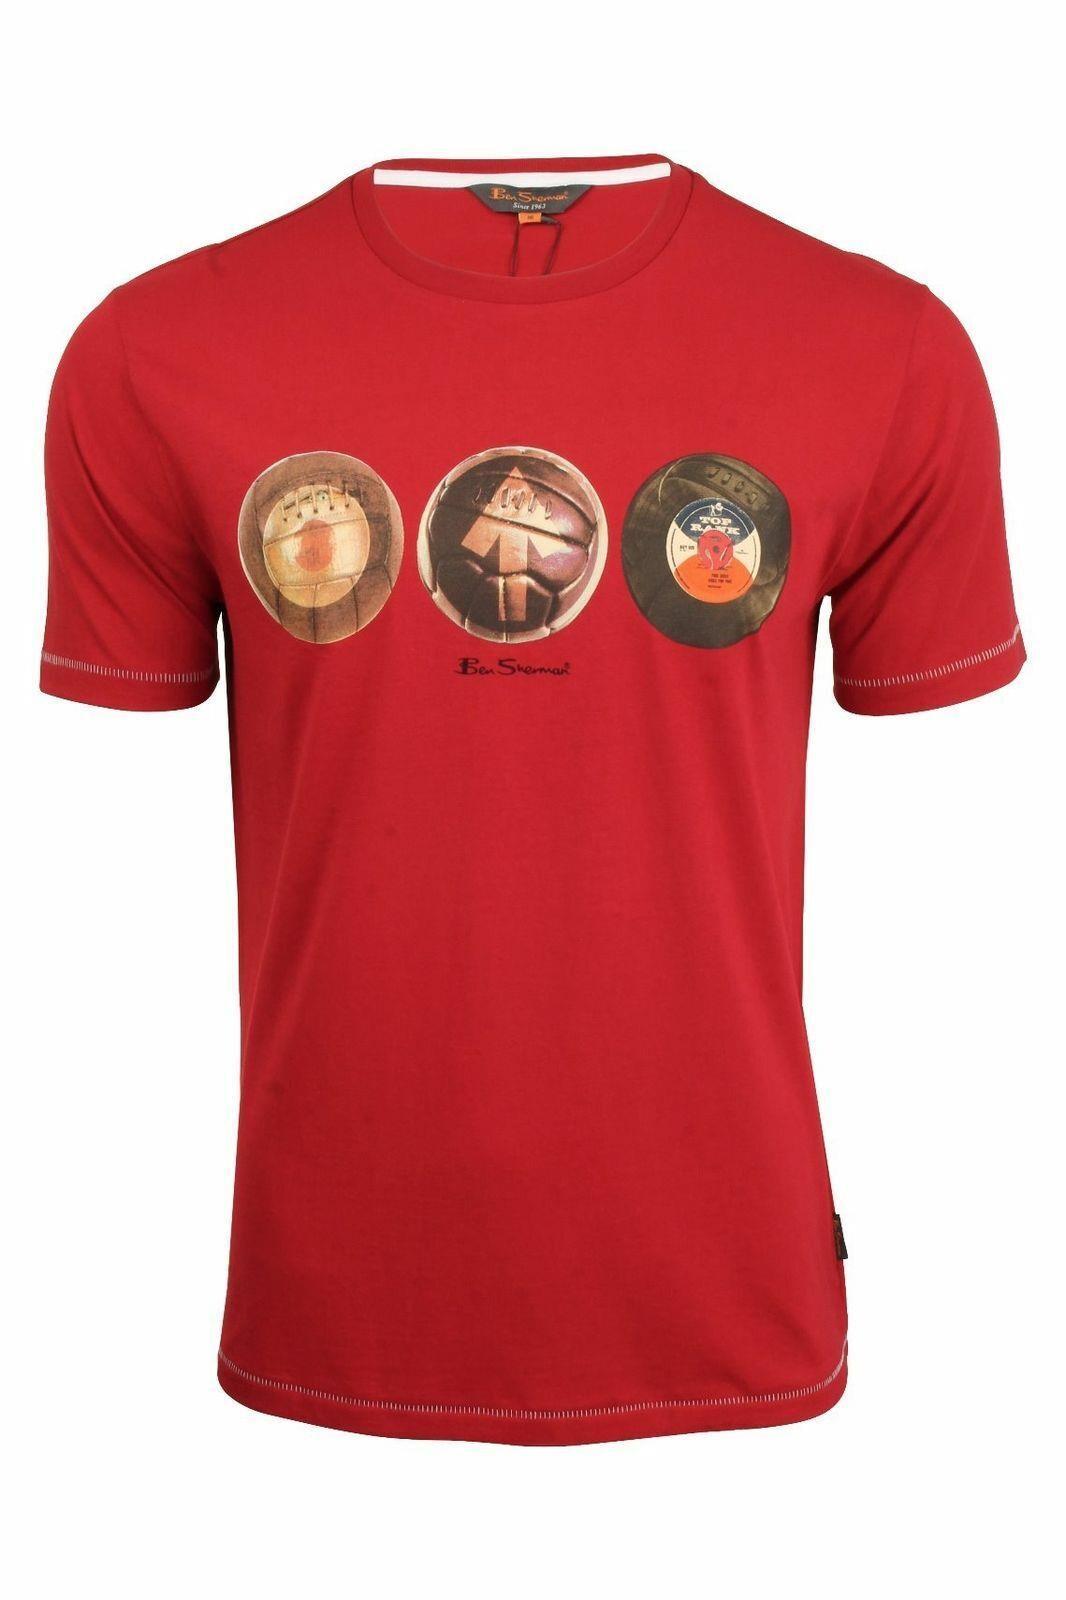 Ben Sherman vintage football Mods cotton men's short sleeve Tee T-shirt #50059